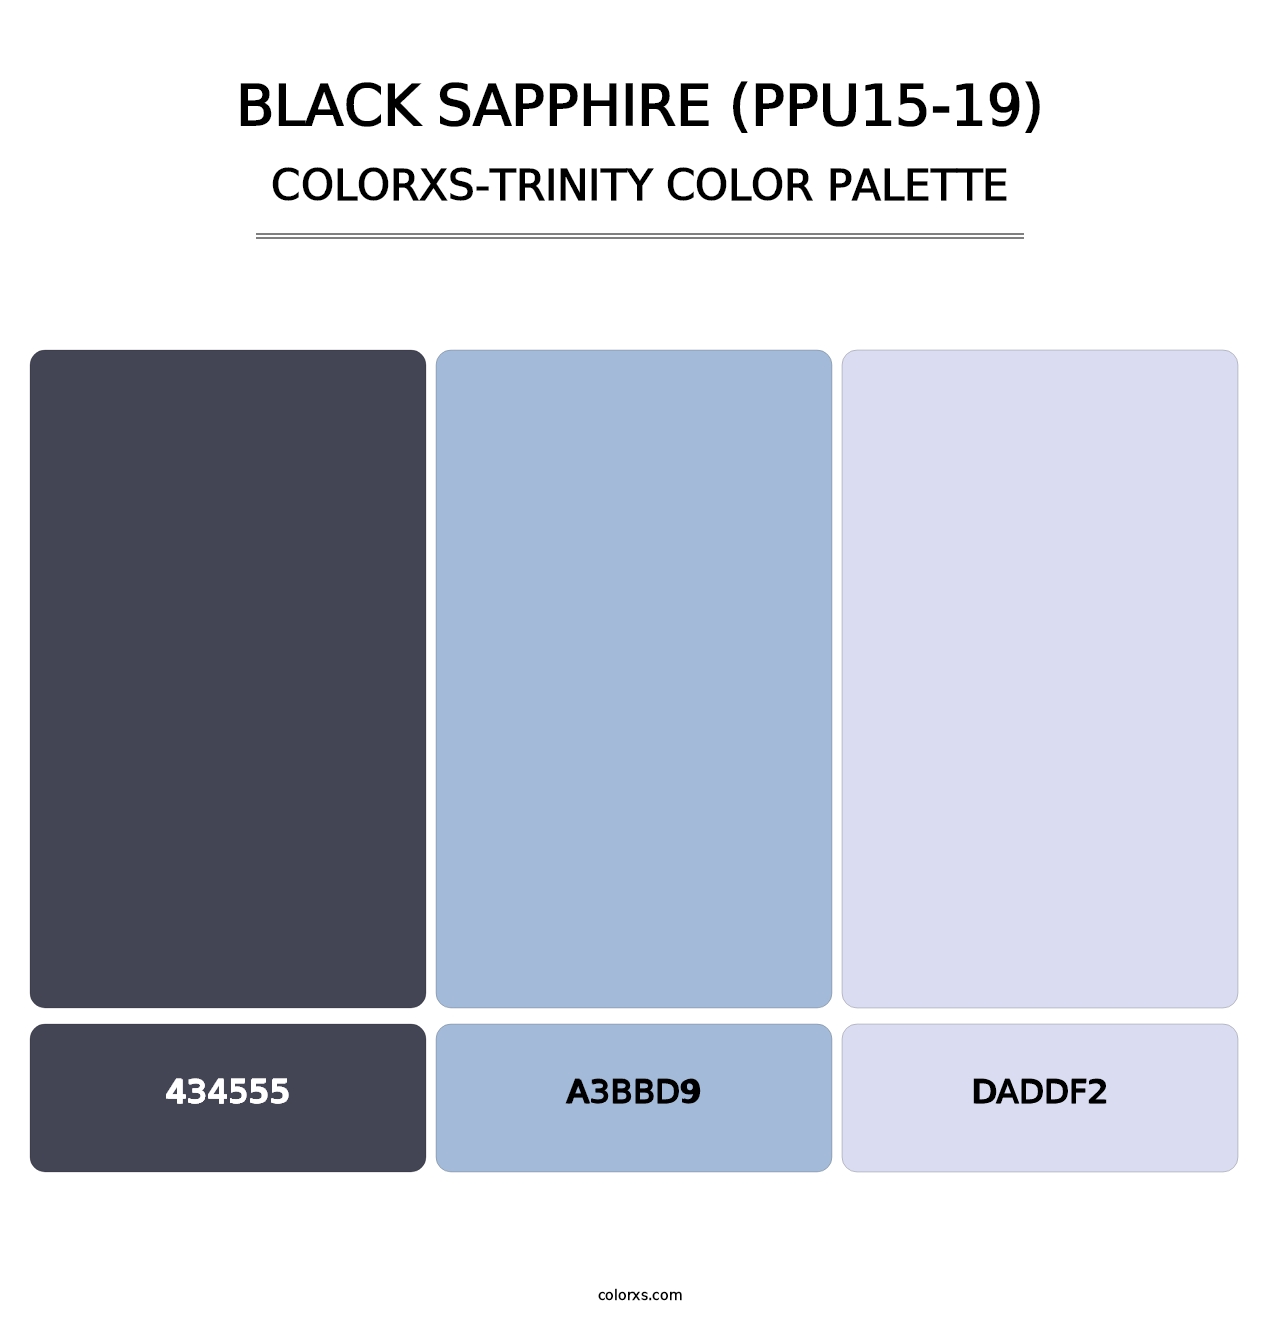 Black Sapphire (PPU15-19) - Colorxs Trinity Palette